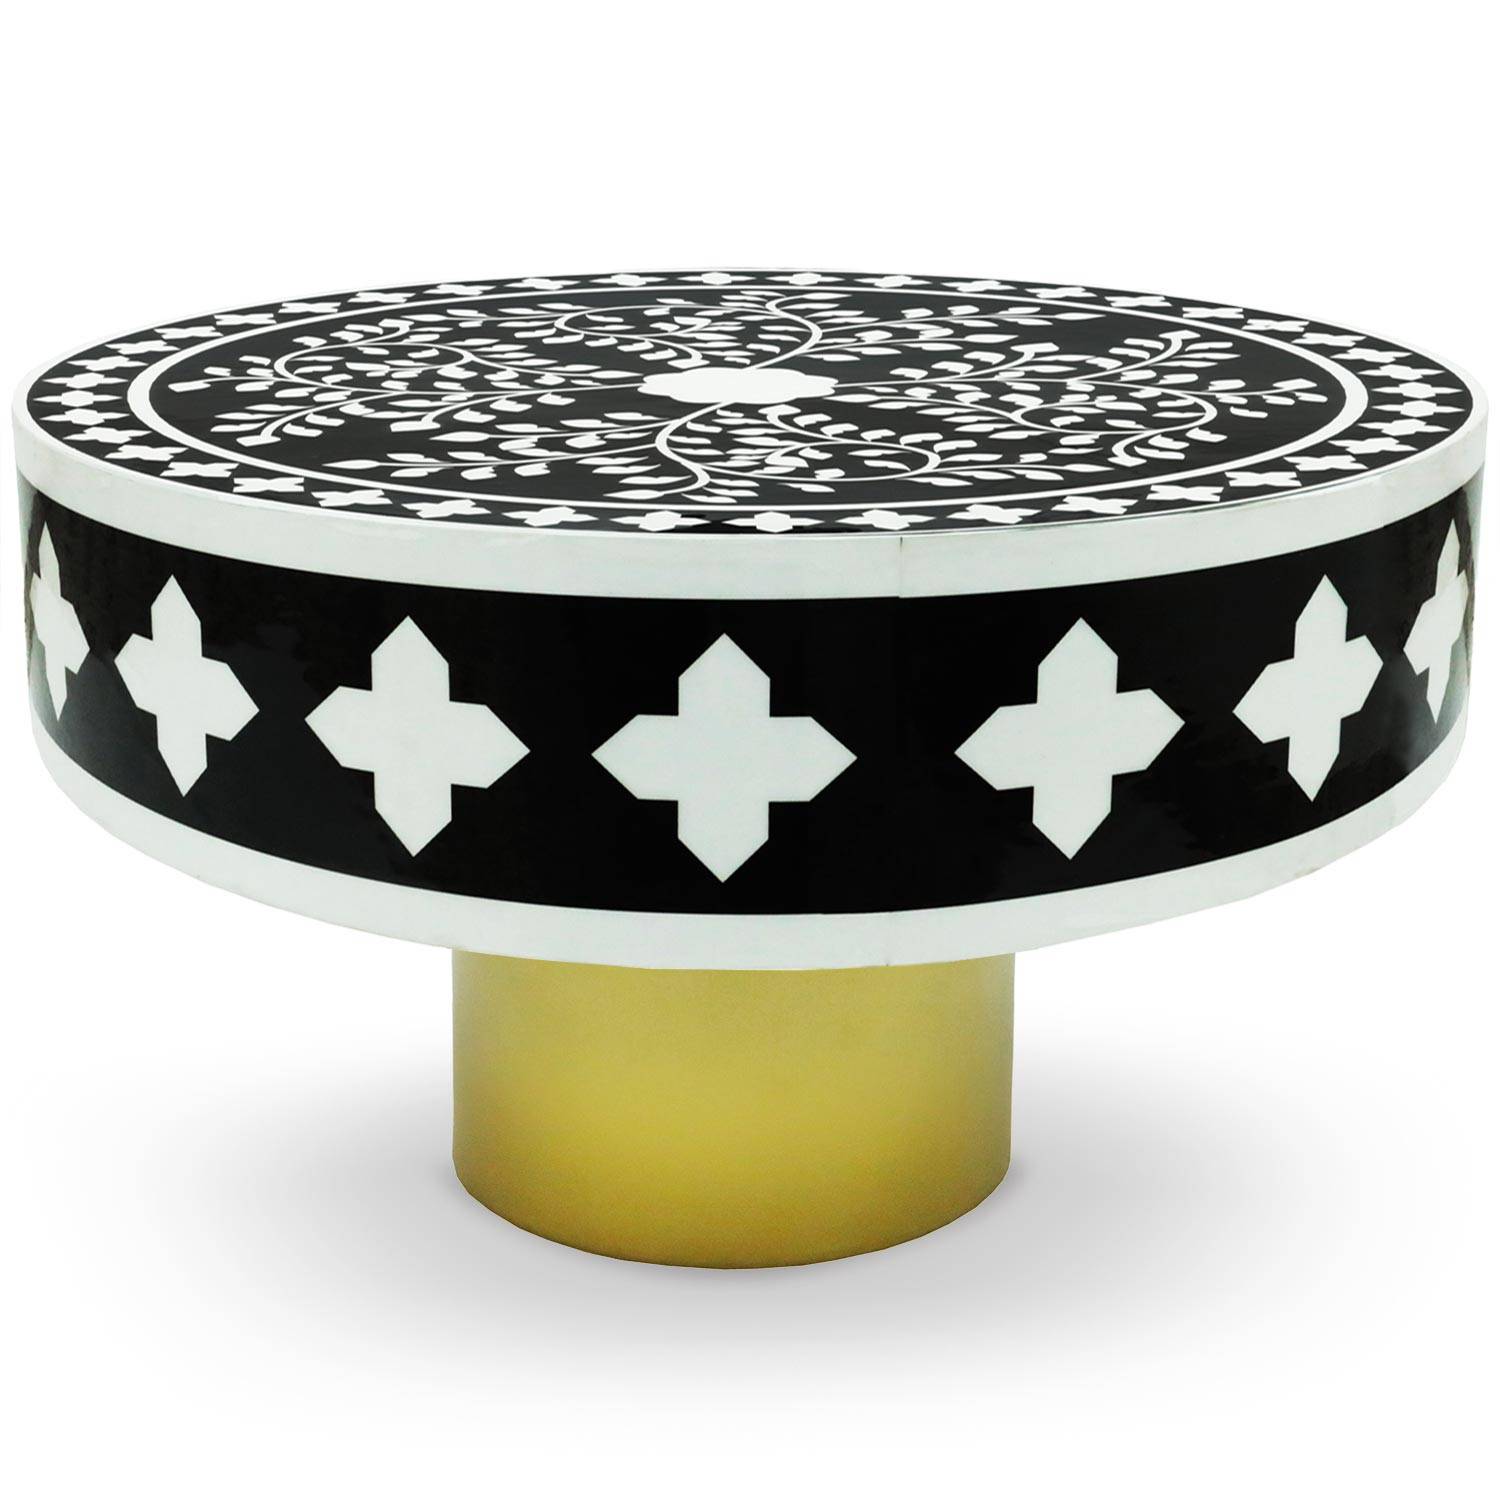 Tavolino rotondo in stile arty Ø71cm Viliana Motivo vegetale bianco e nero e base dorata